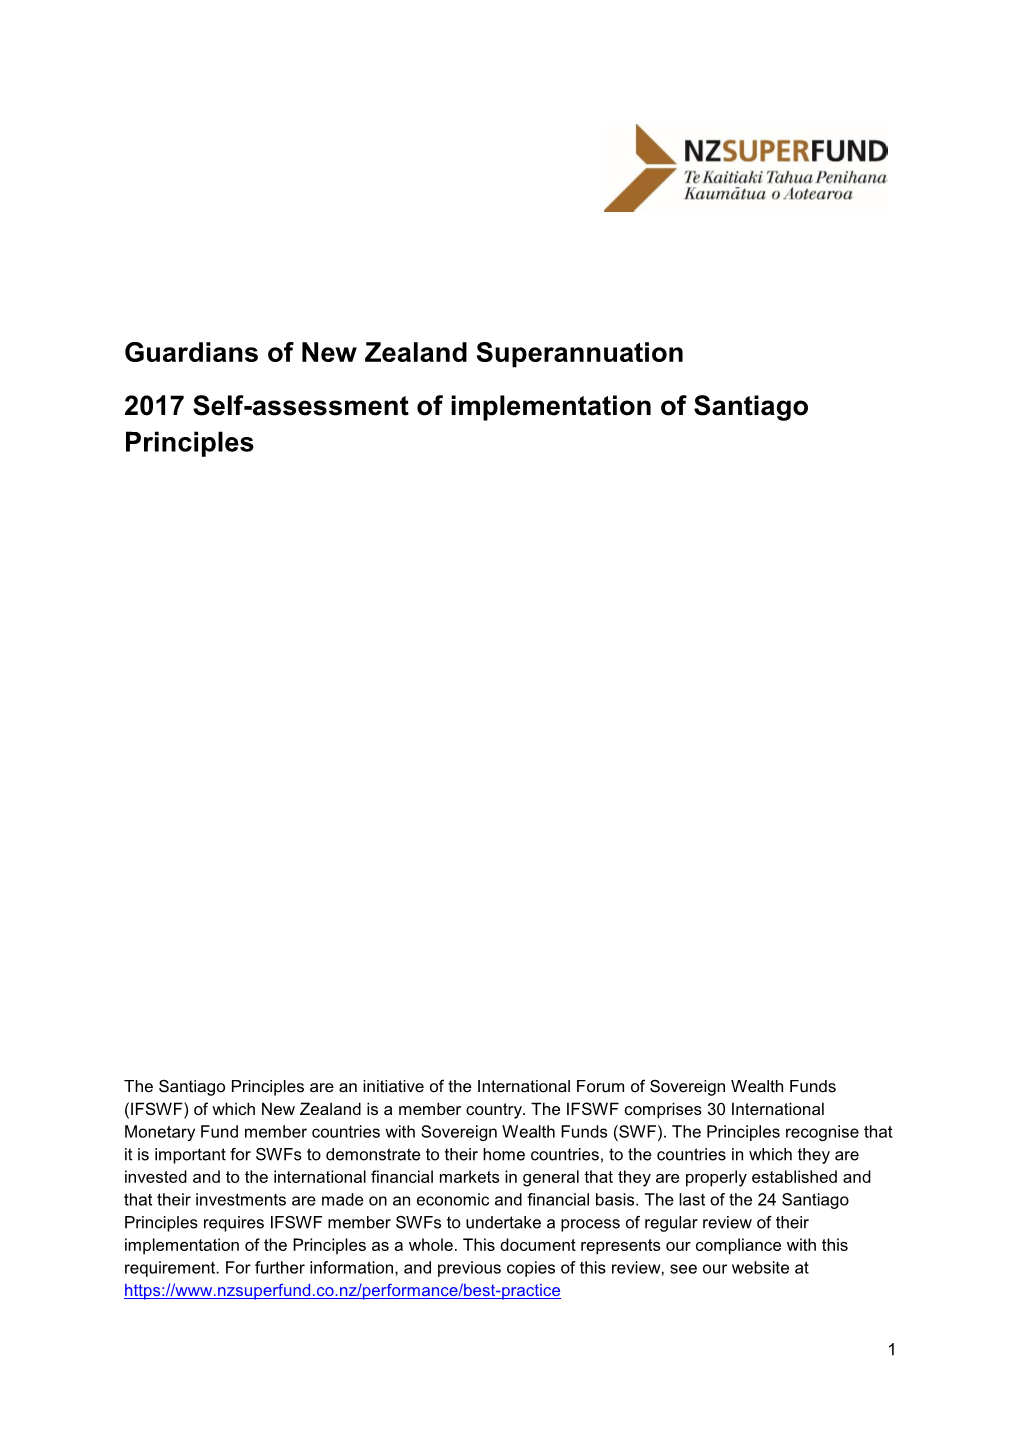 Self-Assessment of Implementation of Santiago Principles